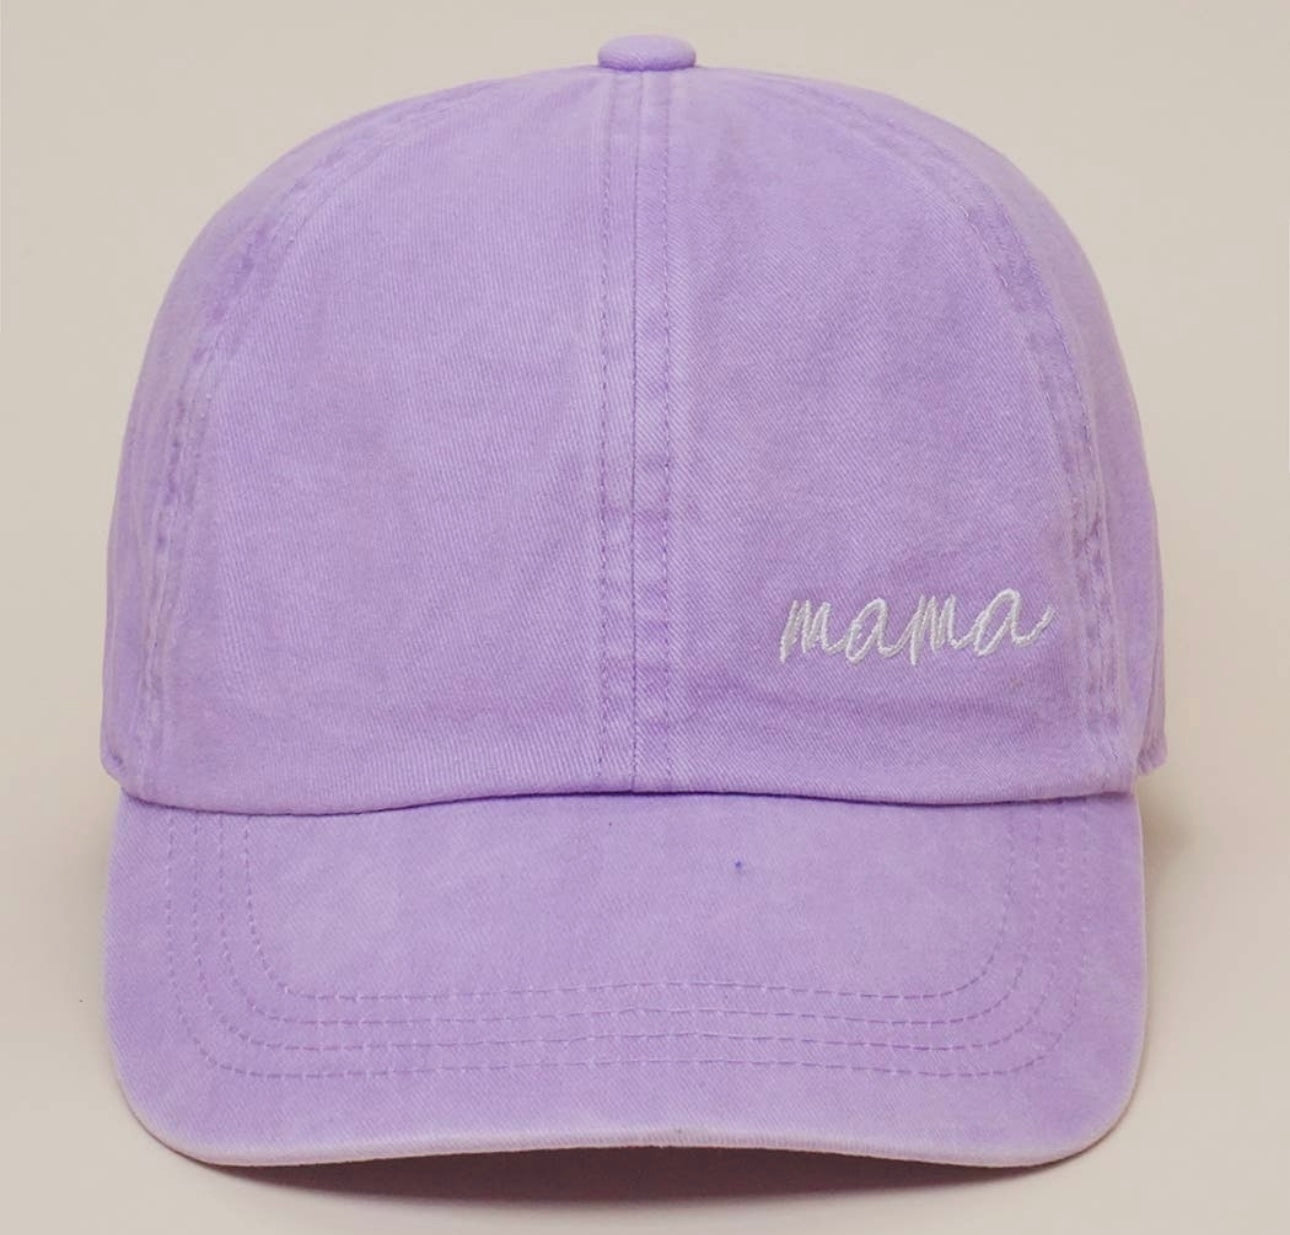 Mama Embroidery Baseball Cap